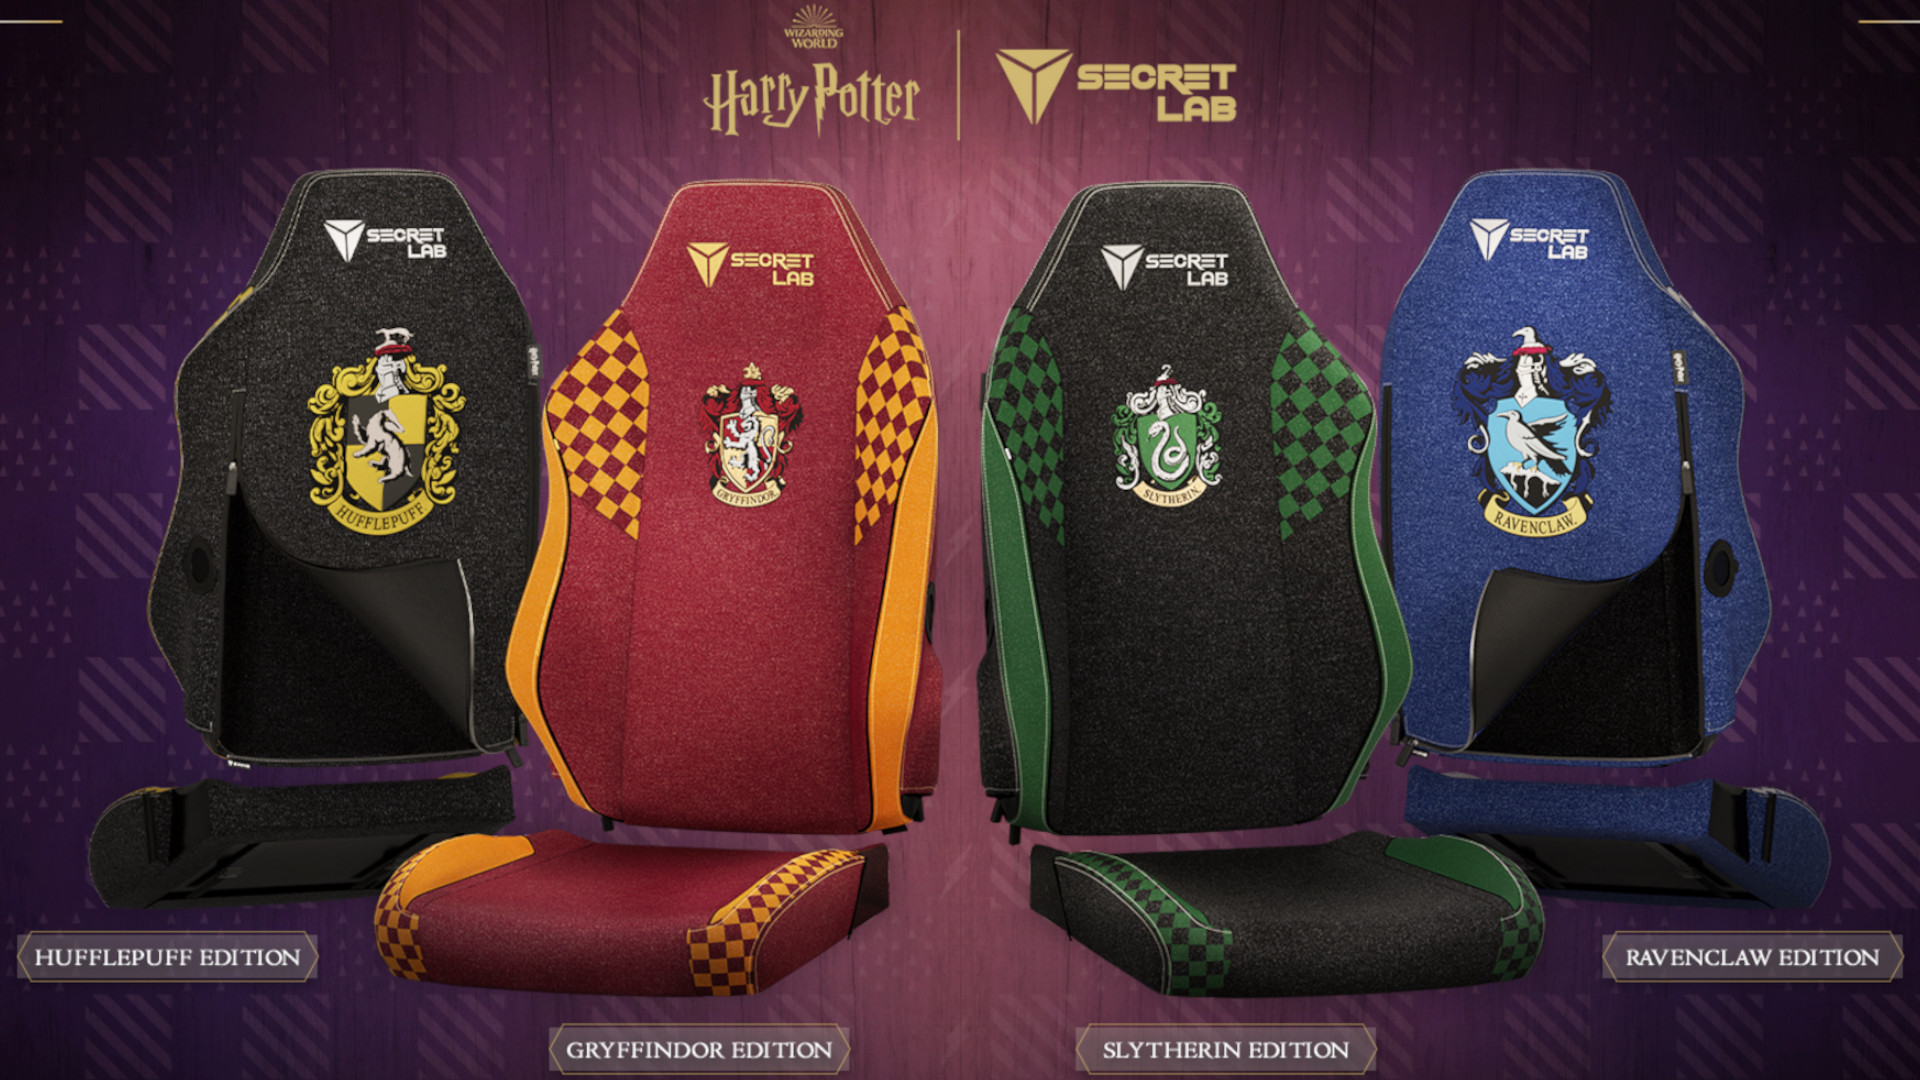 Flex your Hogwarts house with Harry Potter Secretlab chair skins